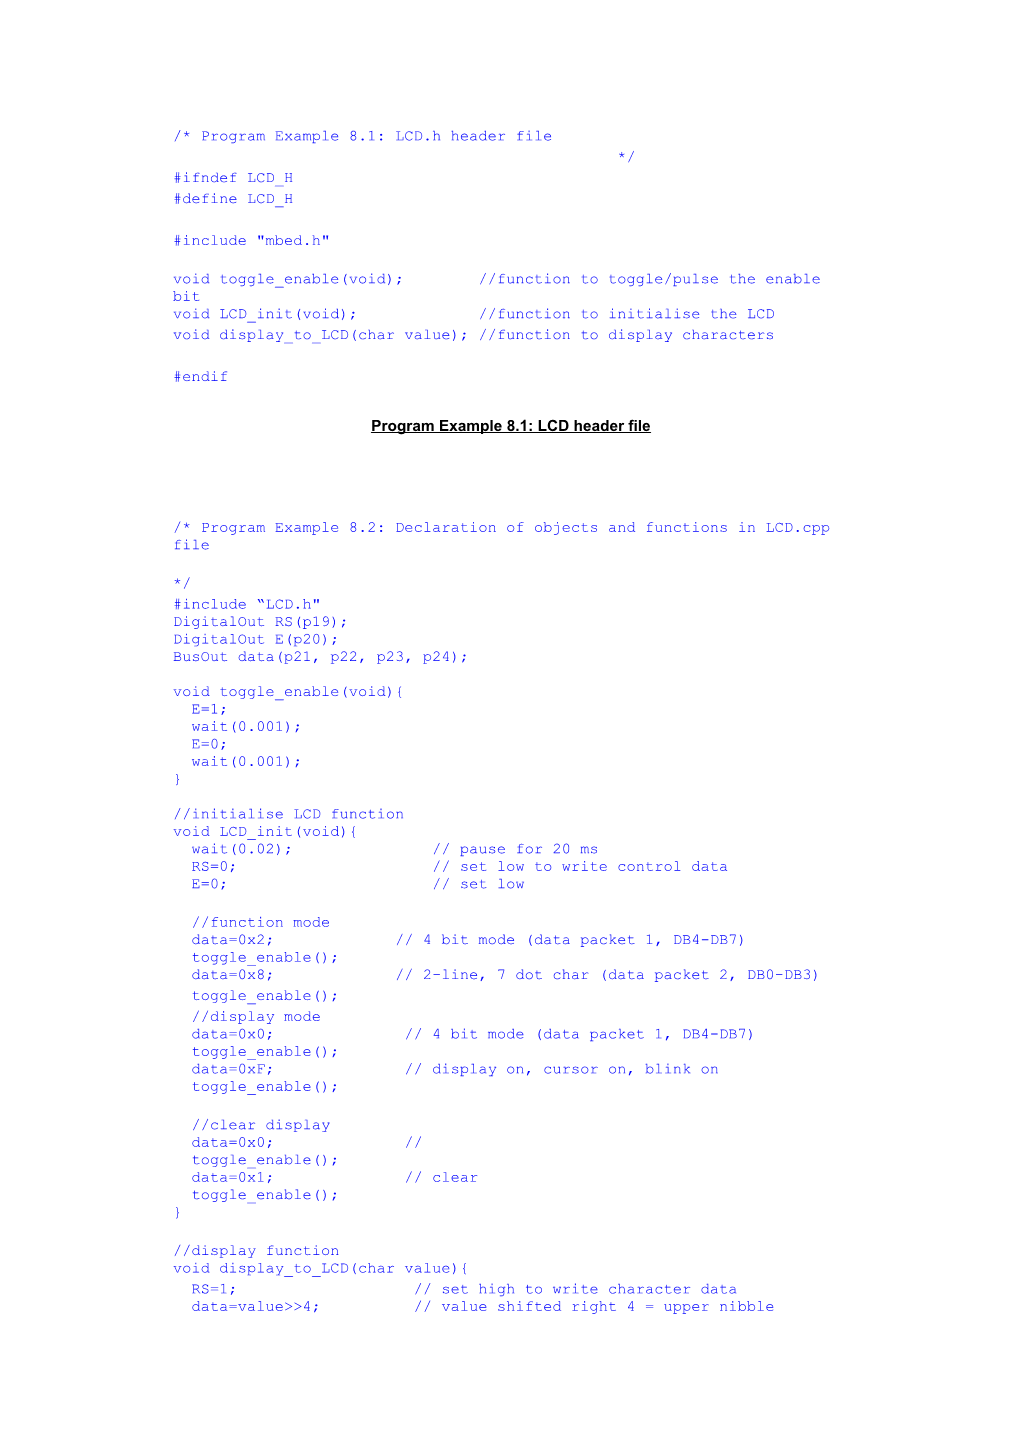 *Program Example 8.1: LCD.H Header File